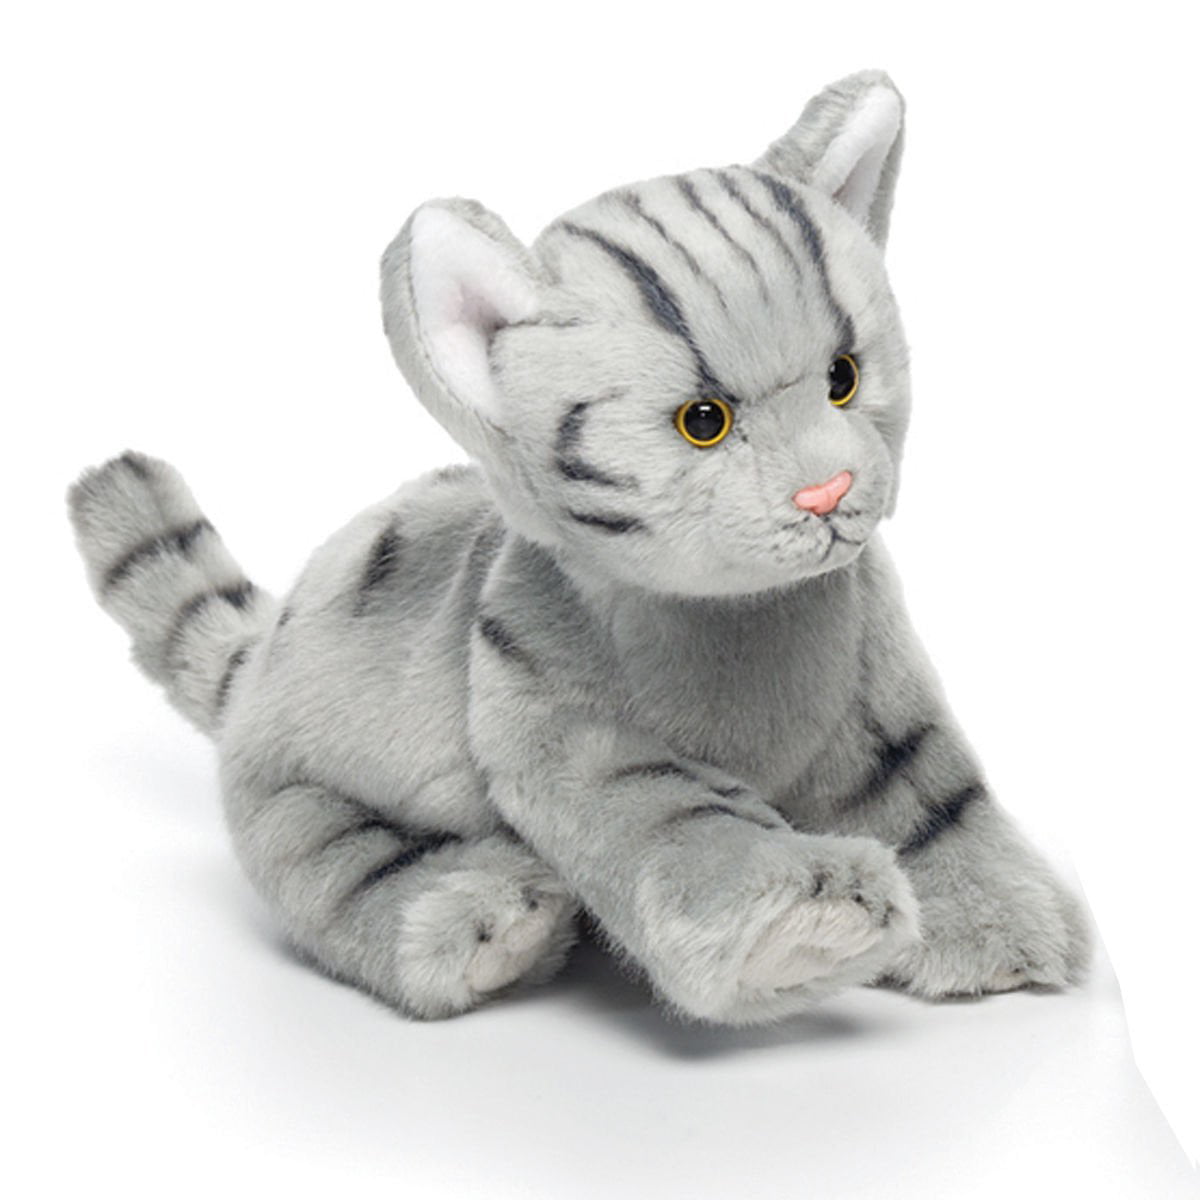 grey tabby cat stuffed animal